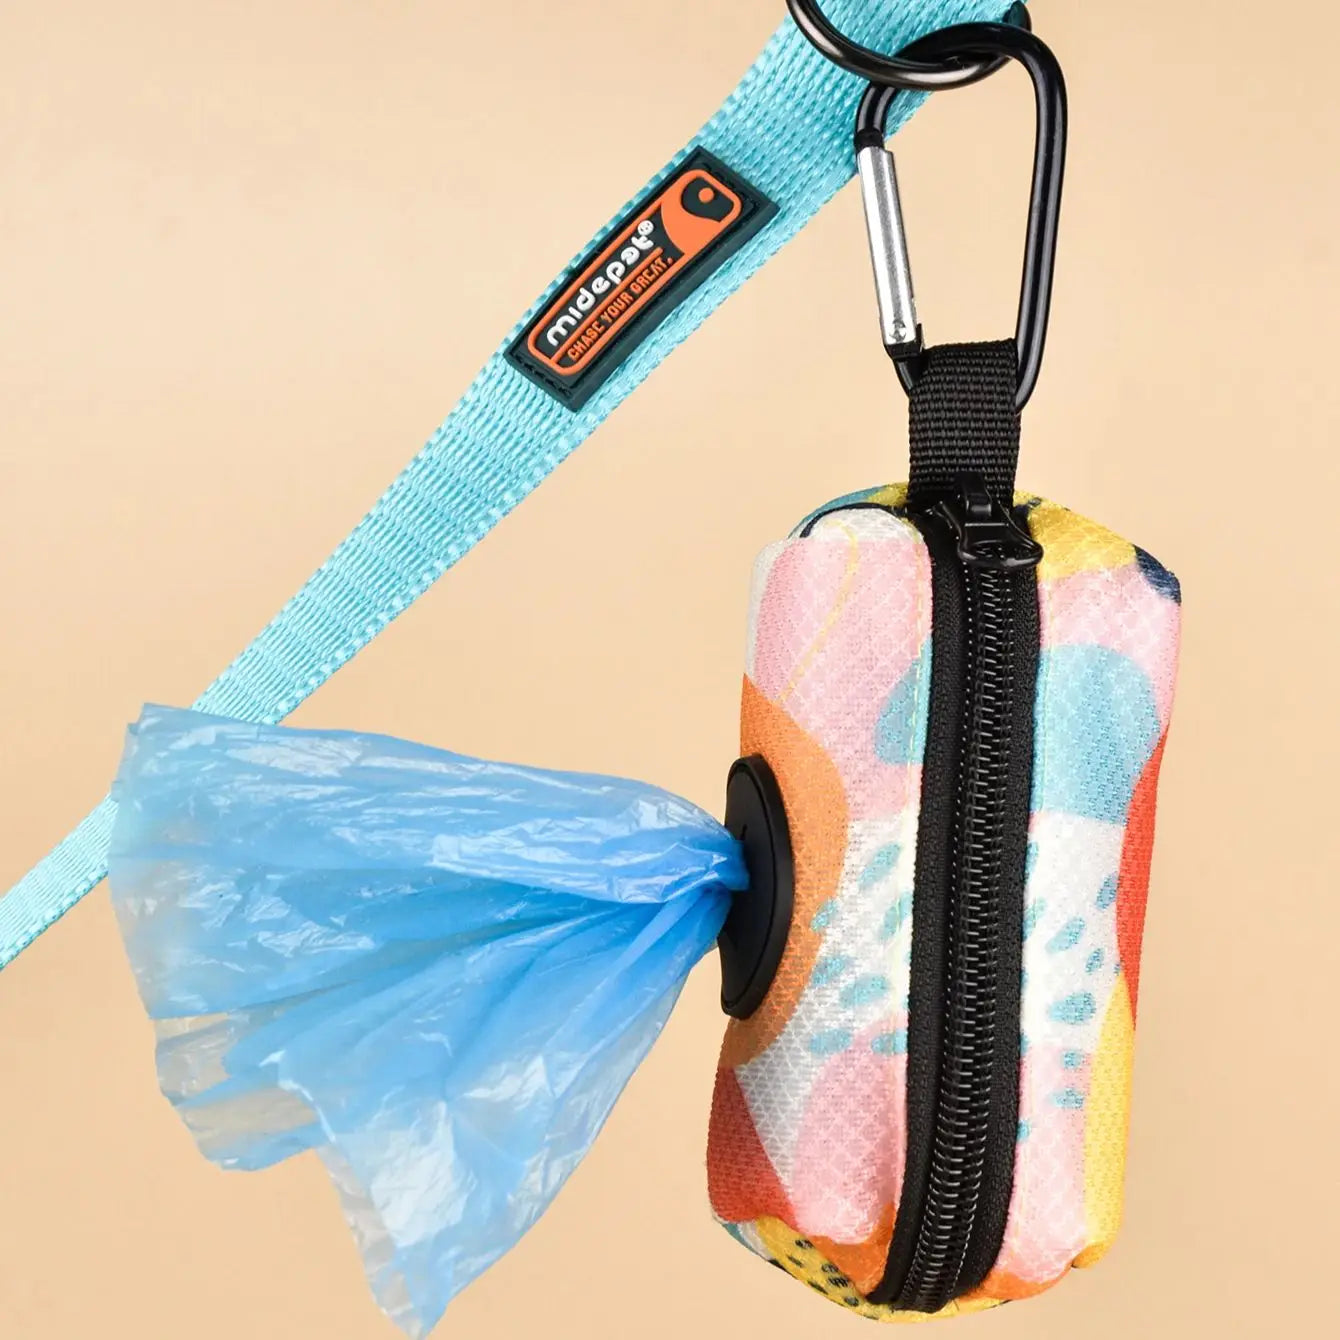 Designer Pet Poop Bag Holder Dispenser: Cute Abstract Print & Leash Attachment  petlums.com   